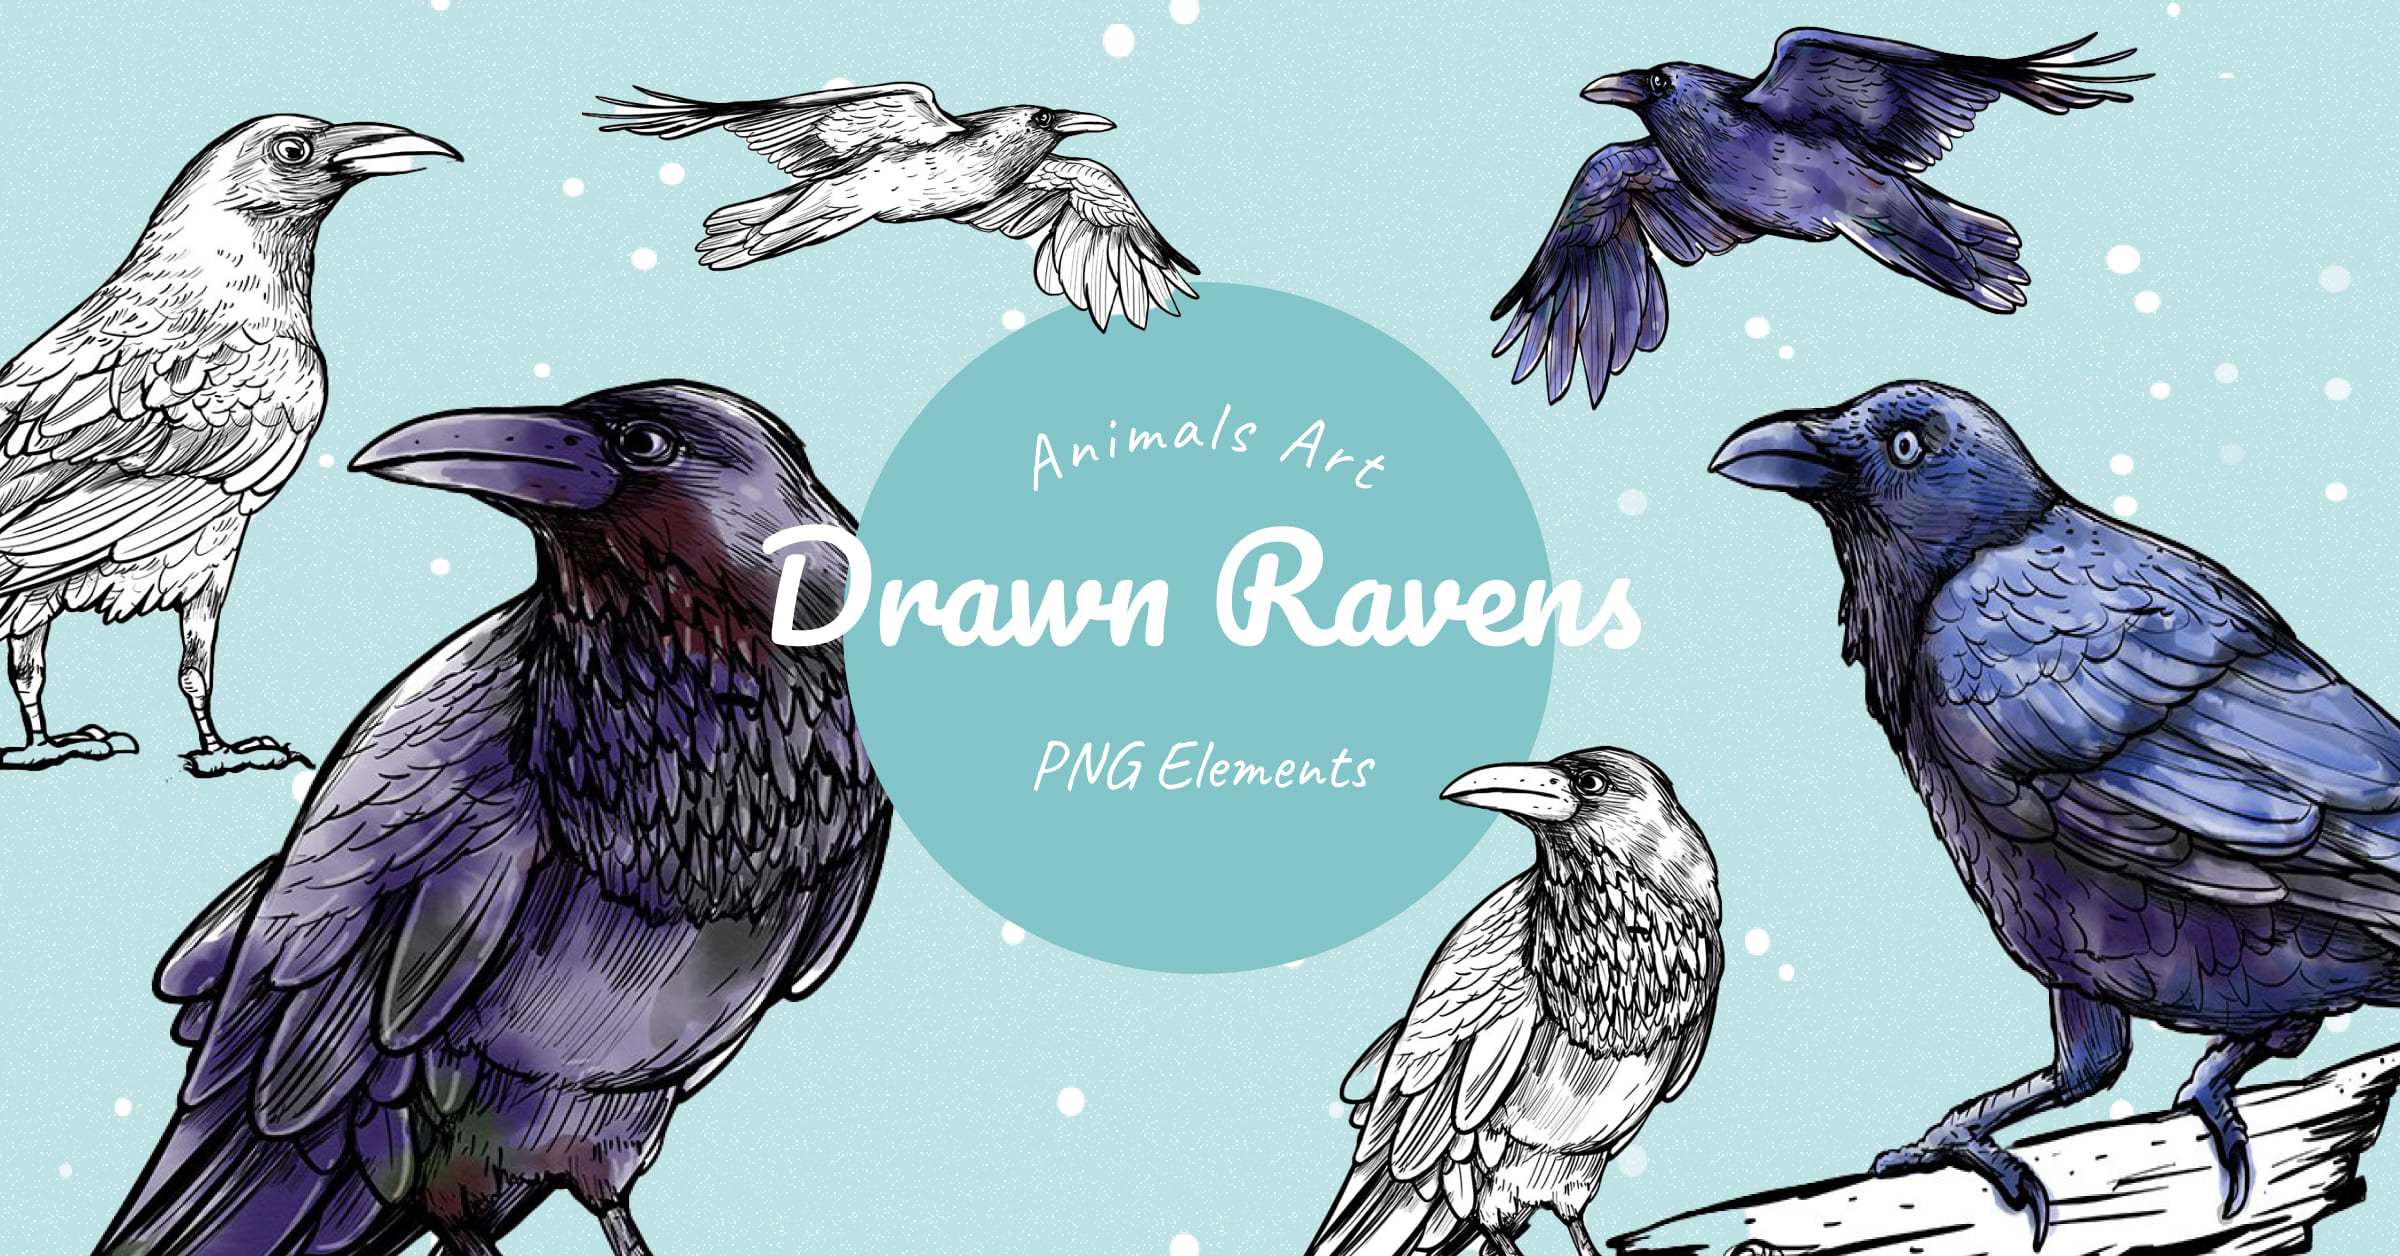 Drawn ravens - Facebook image preview.